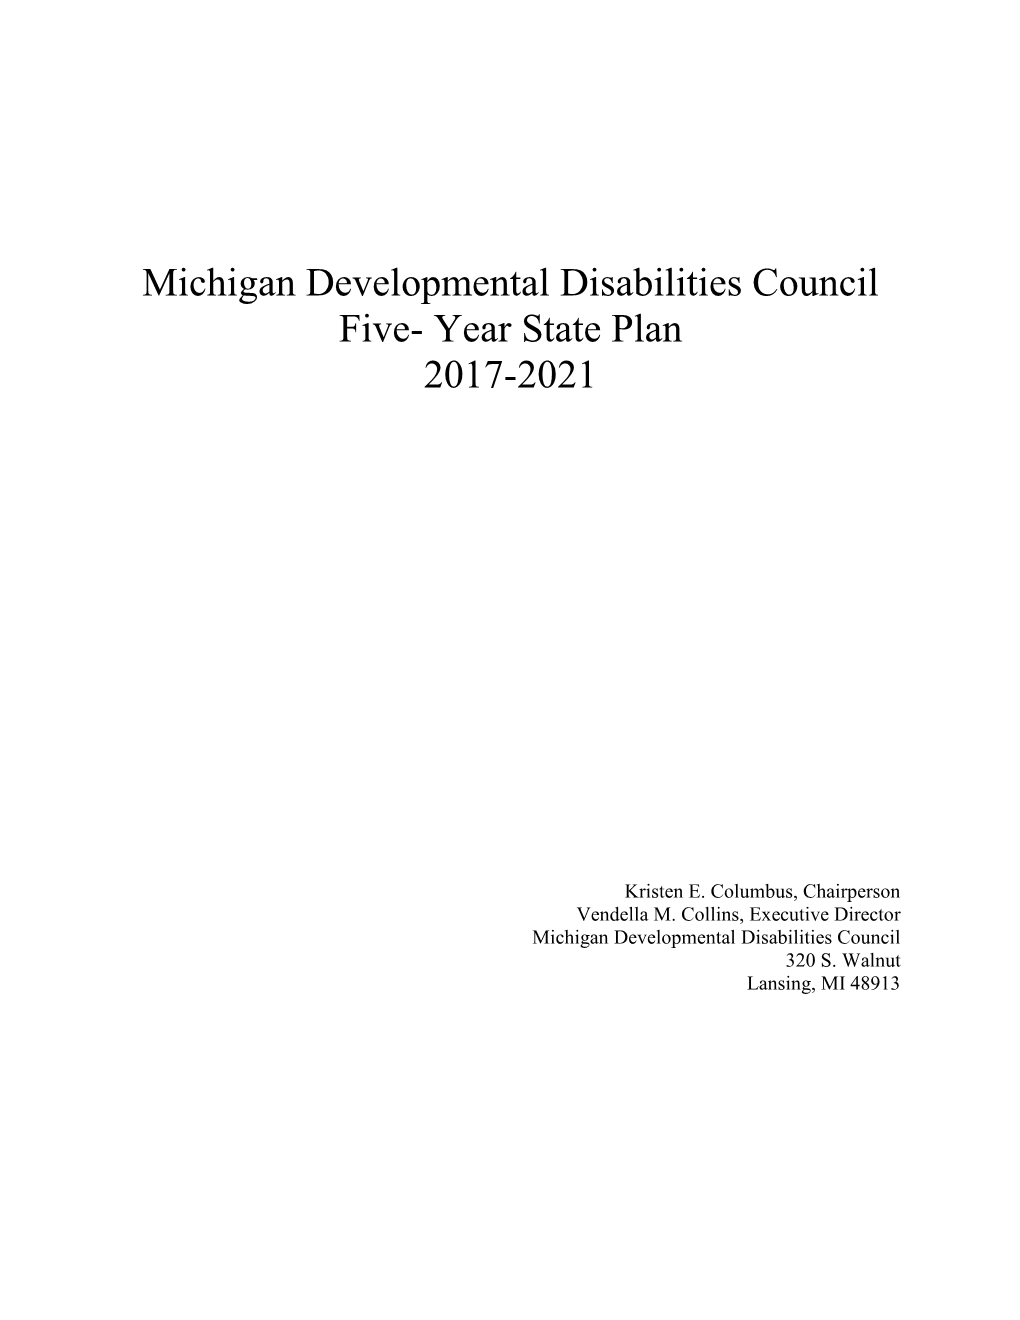 Michigan Developmental Disabilities Council Five- Year State Plan 2017-2021